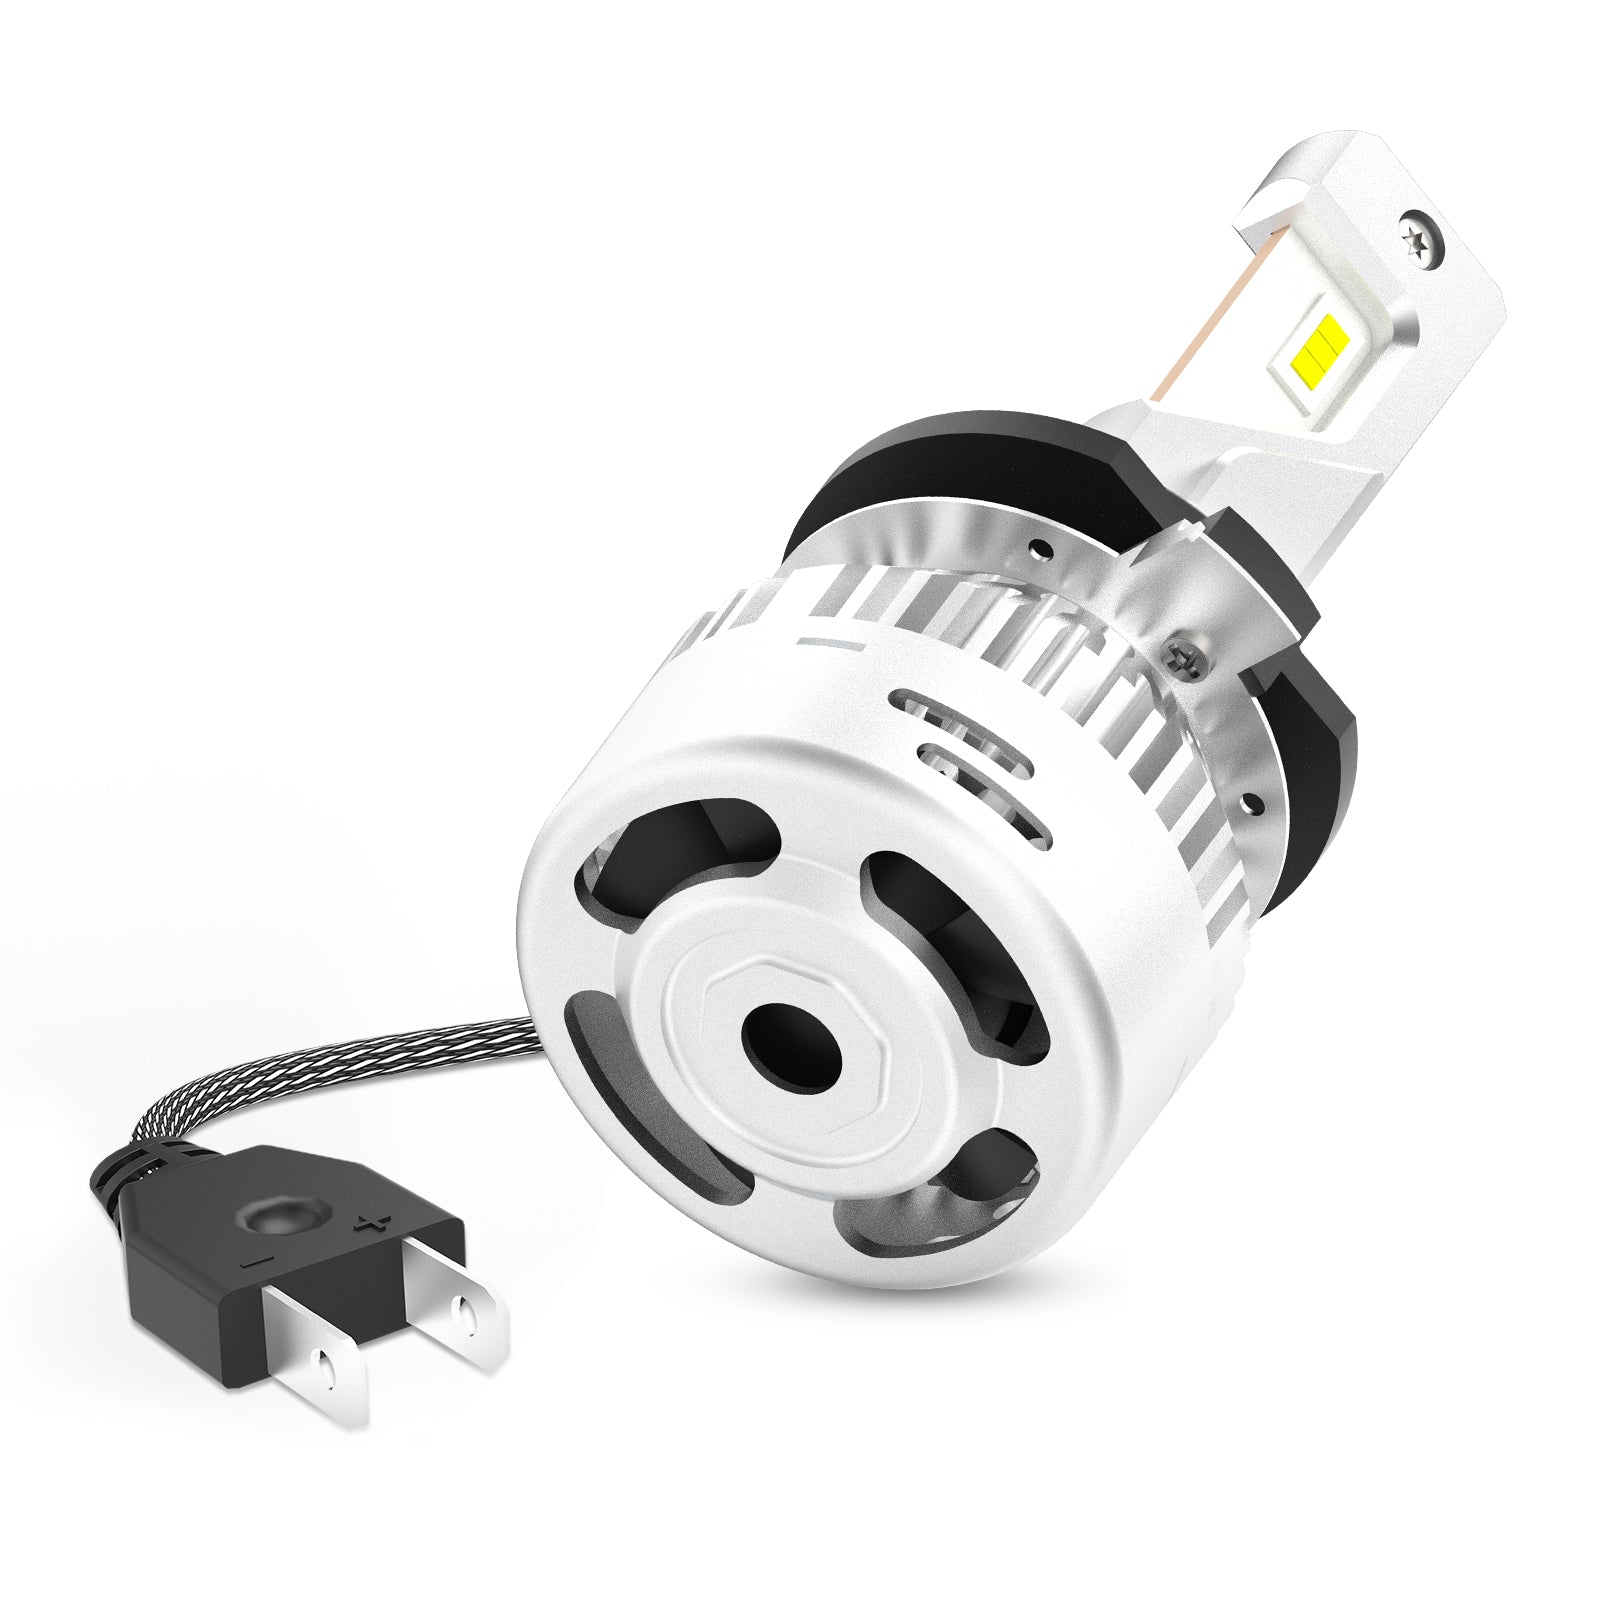 LASFIT H7 LED Headlight Bulbs High/Low Beam/Fog Light Fanless, H7  Conversion Kit 40W 4000LM 6000K White(2 pcs) 